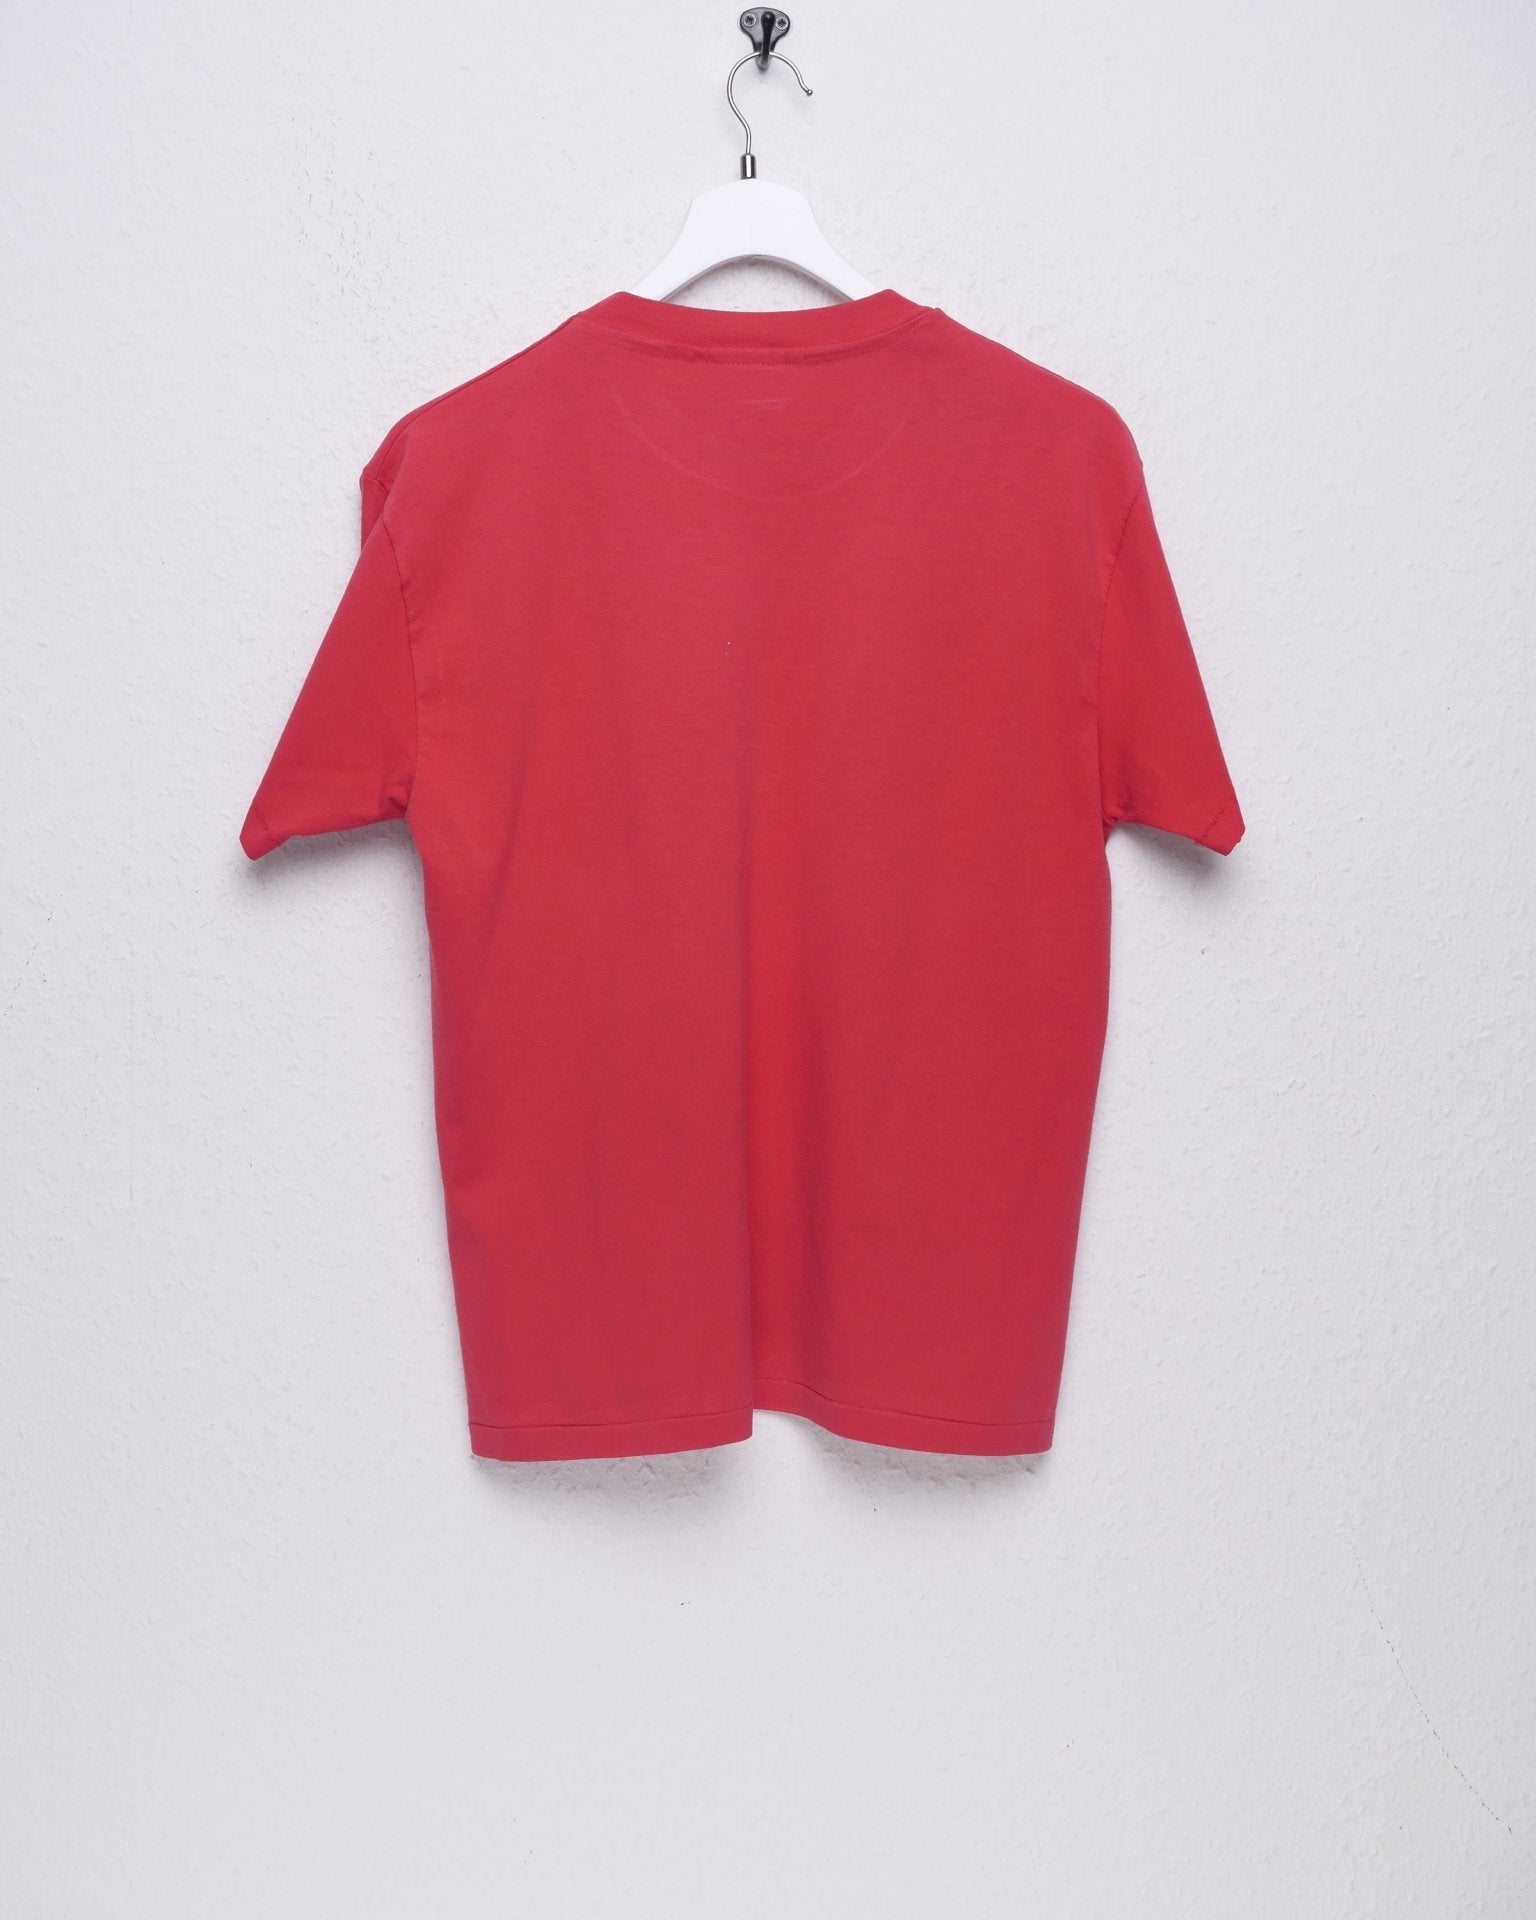 'Puerto Rico' printed red Shirt - Peeces